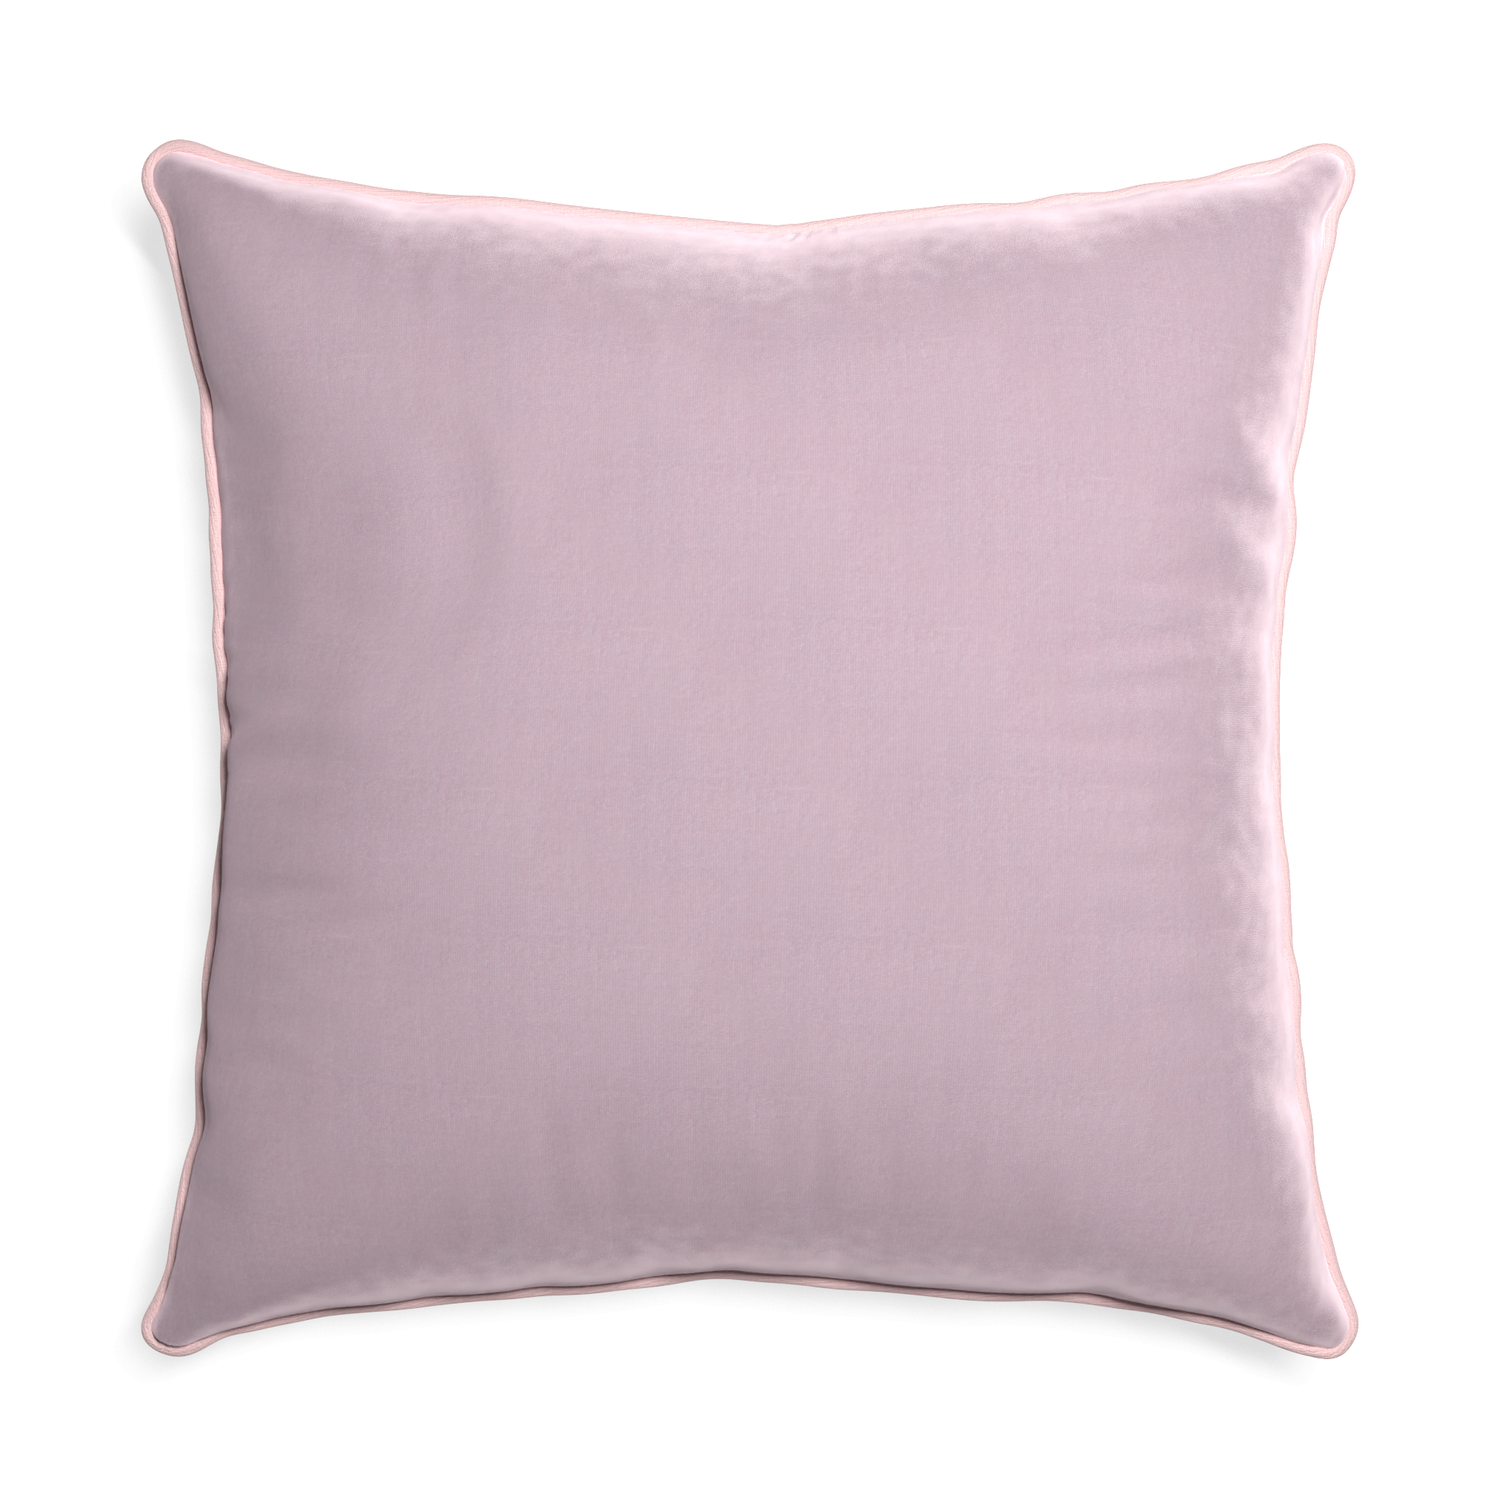 Euro-sham lilac velvet custom pillow with petal piping on white background